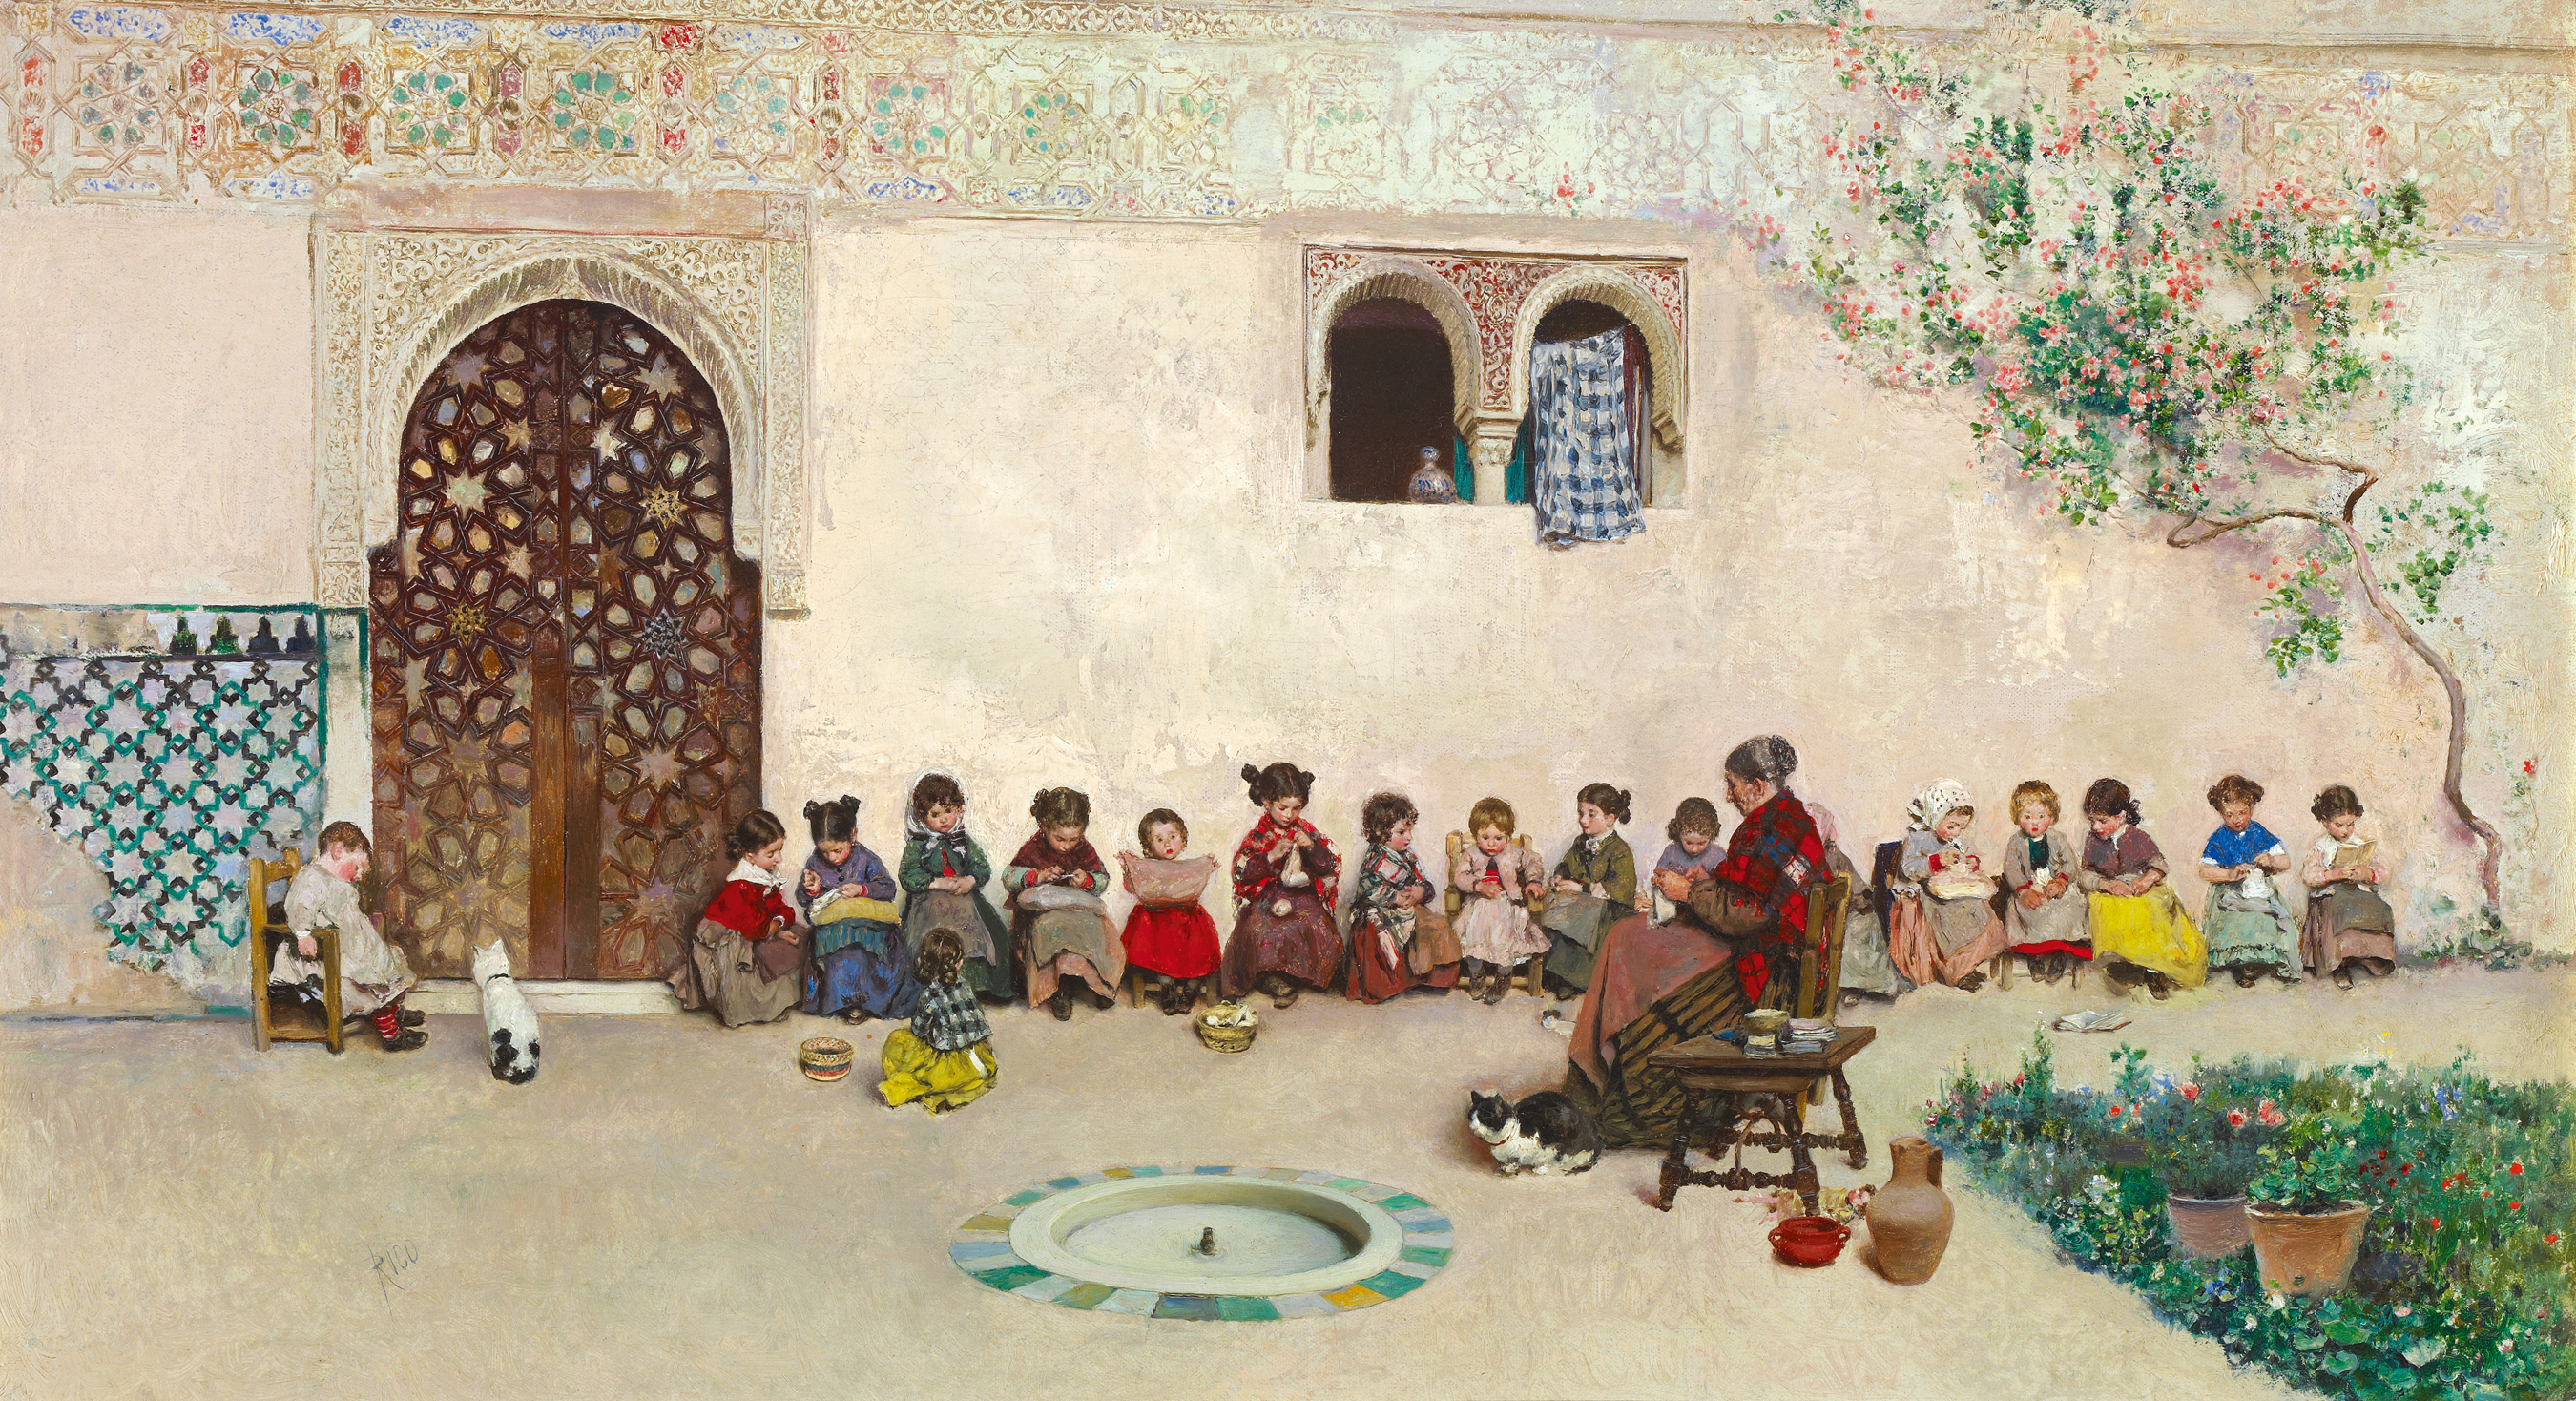 Martín Rico y Ortega (Spanish, 1833-1908), The School Patio, 1871. Oil on canvas. Private collection, Madrid